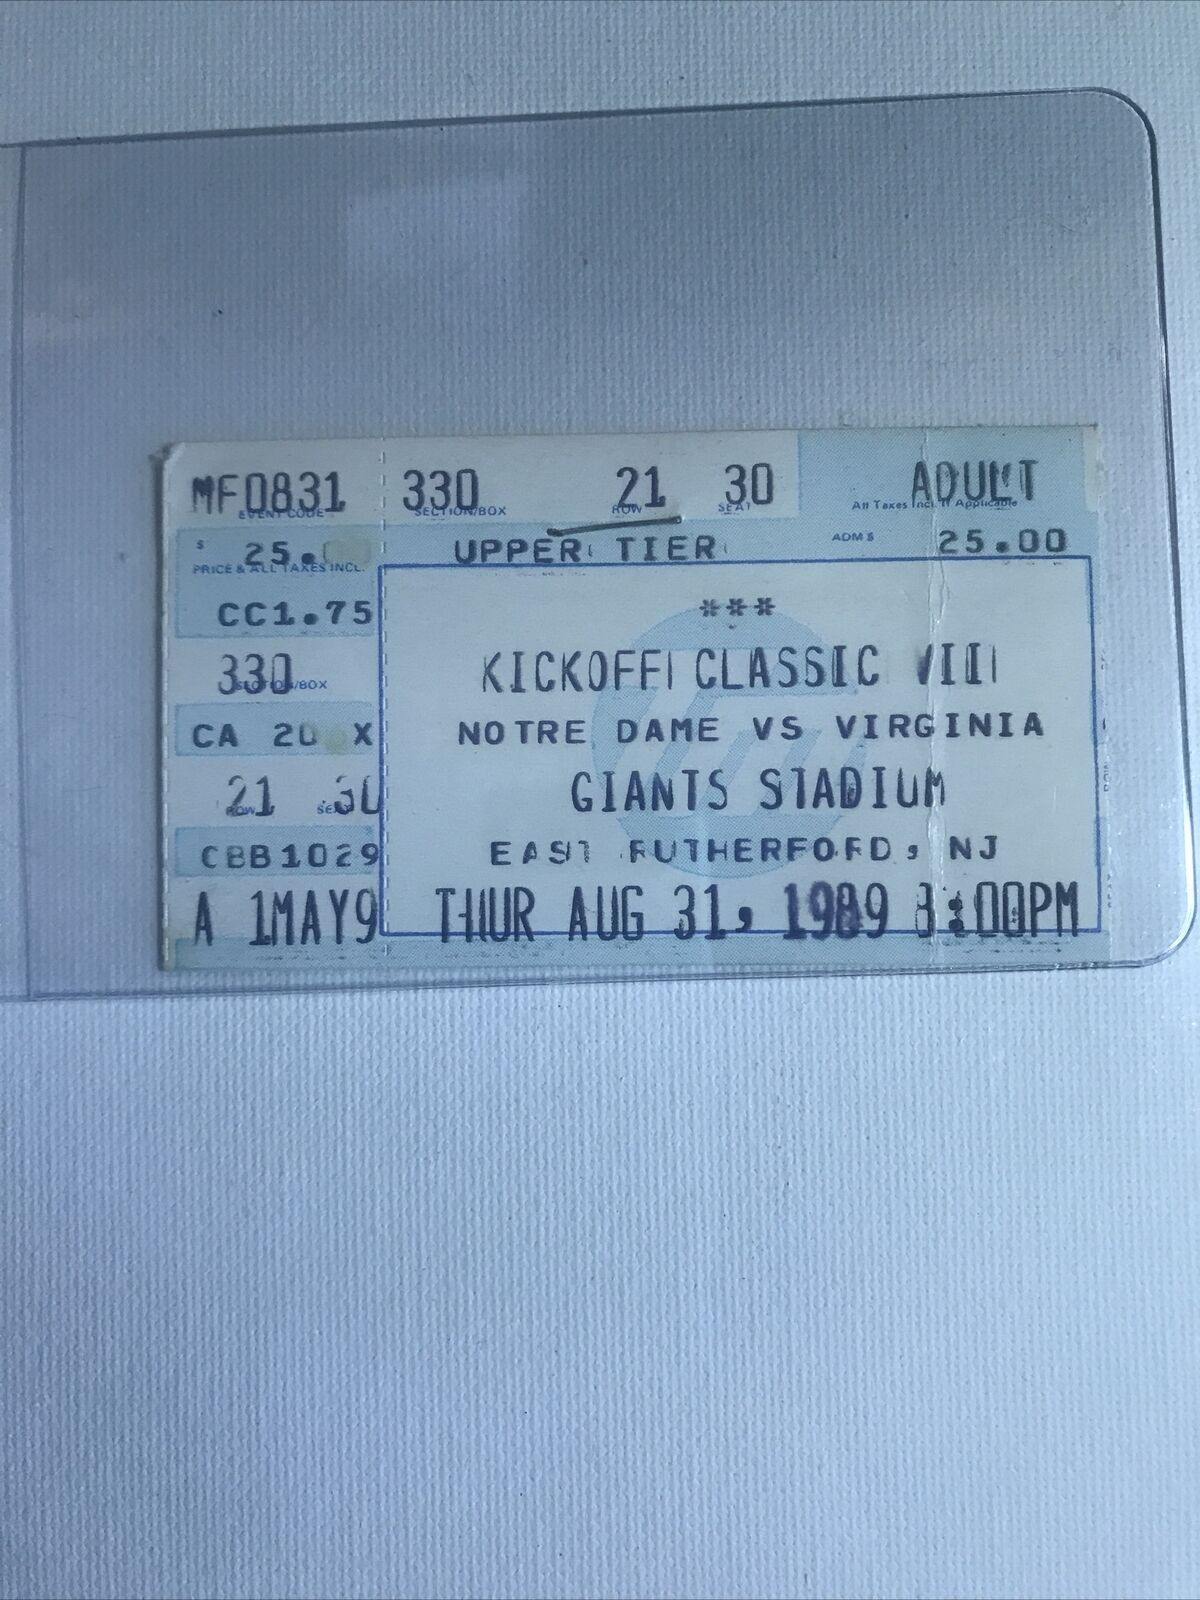 1989 Kick Off Classic VII Notre Dame Bs Virginia Program and Ticket Stub